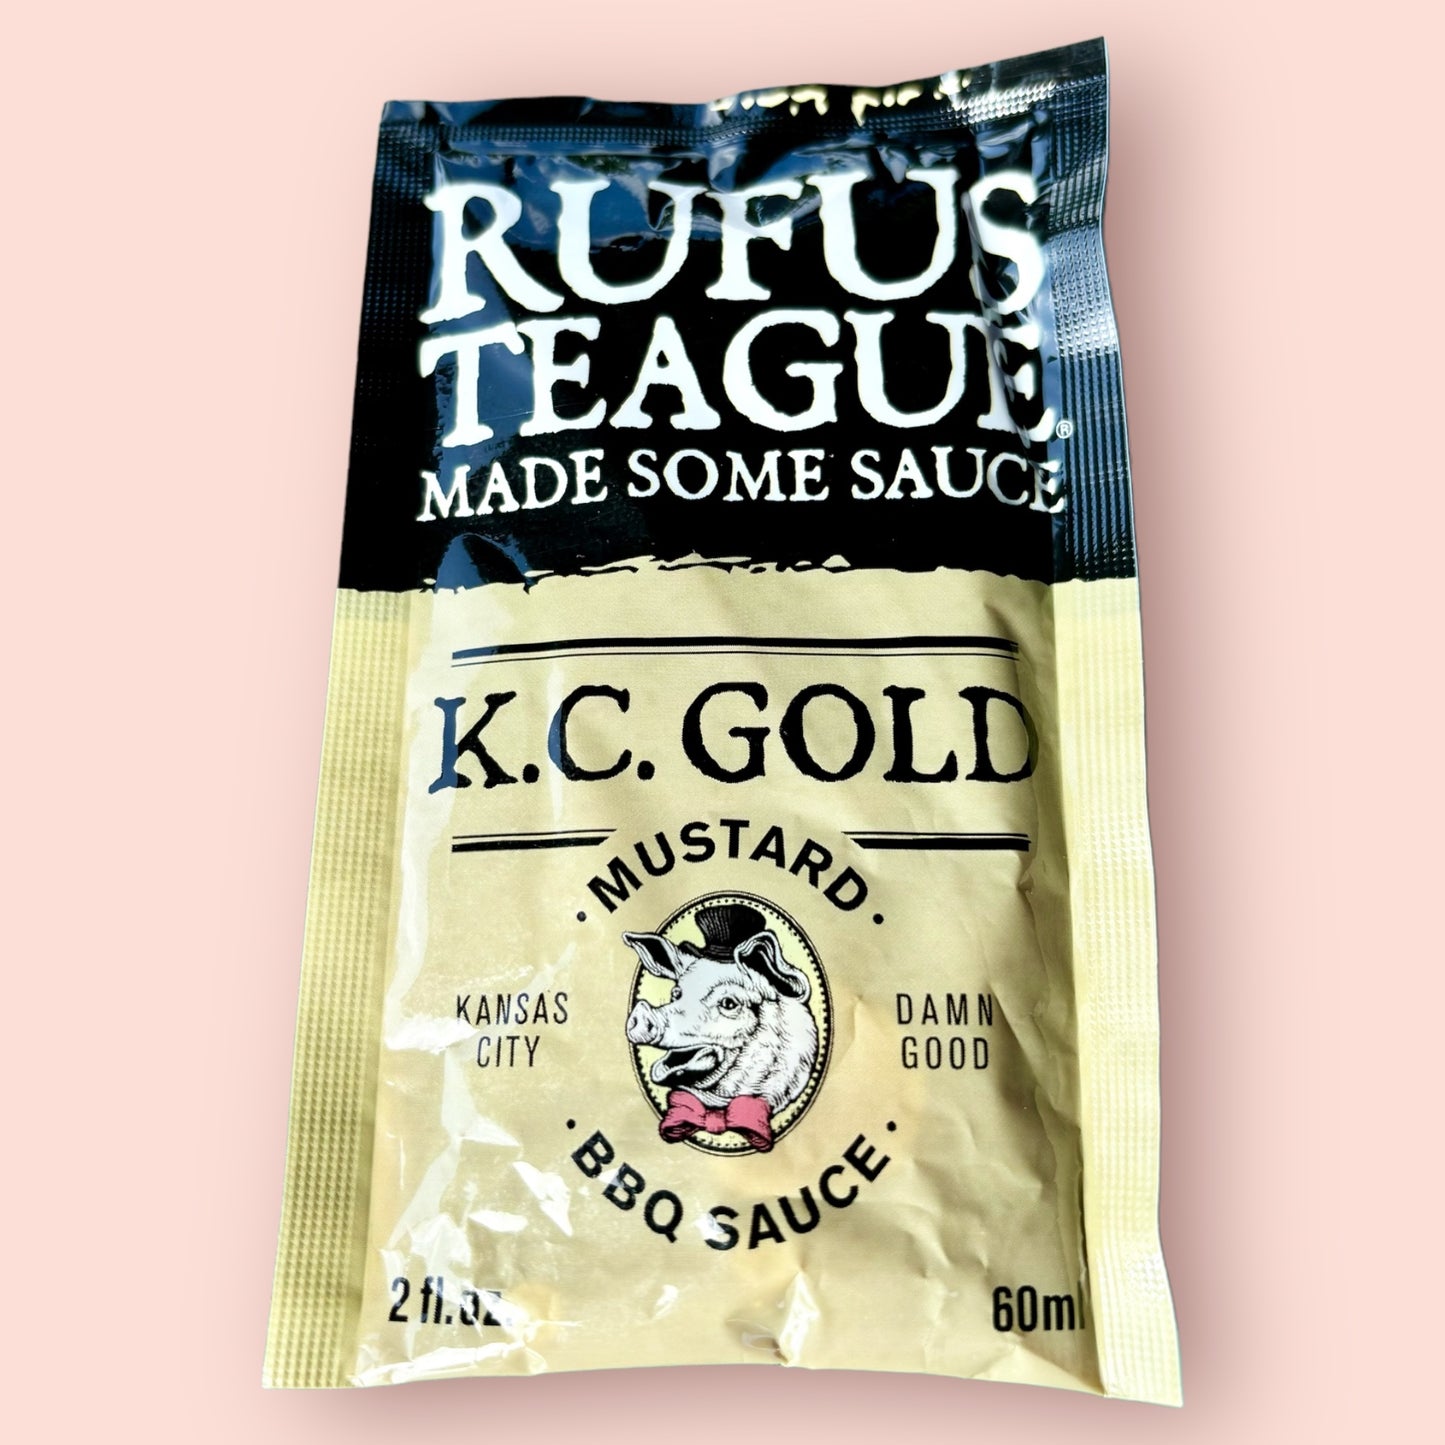 Rufus Teague K.C. Gold Mustard BBQ sauce